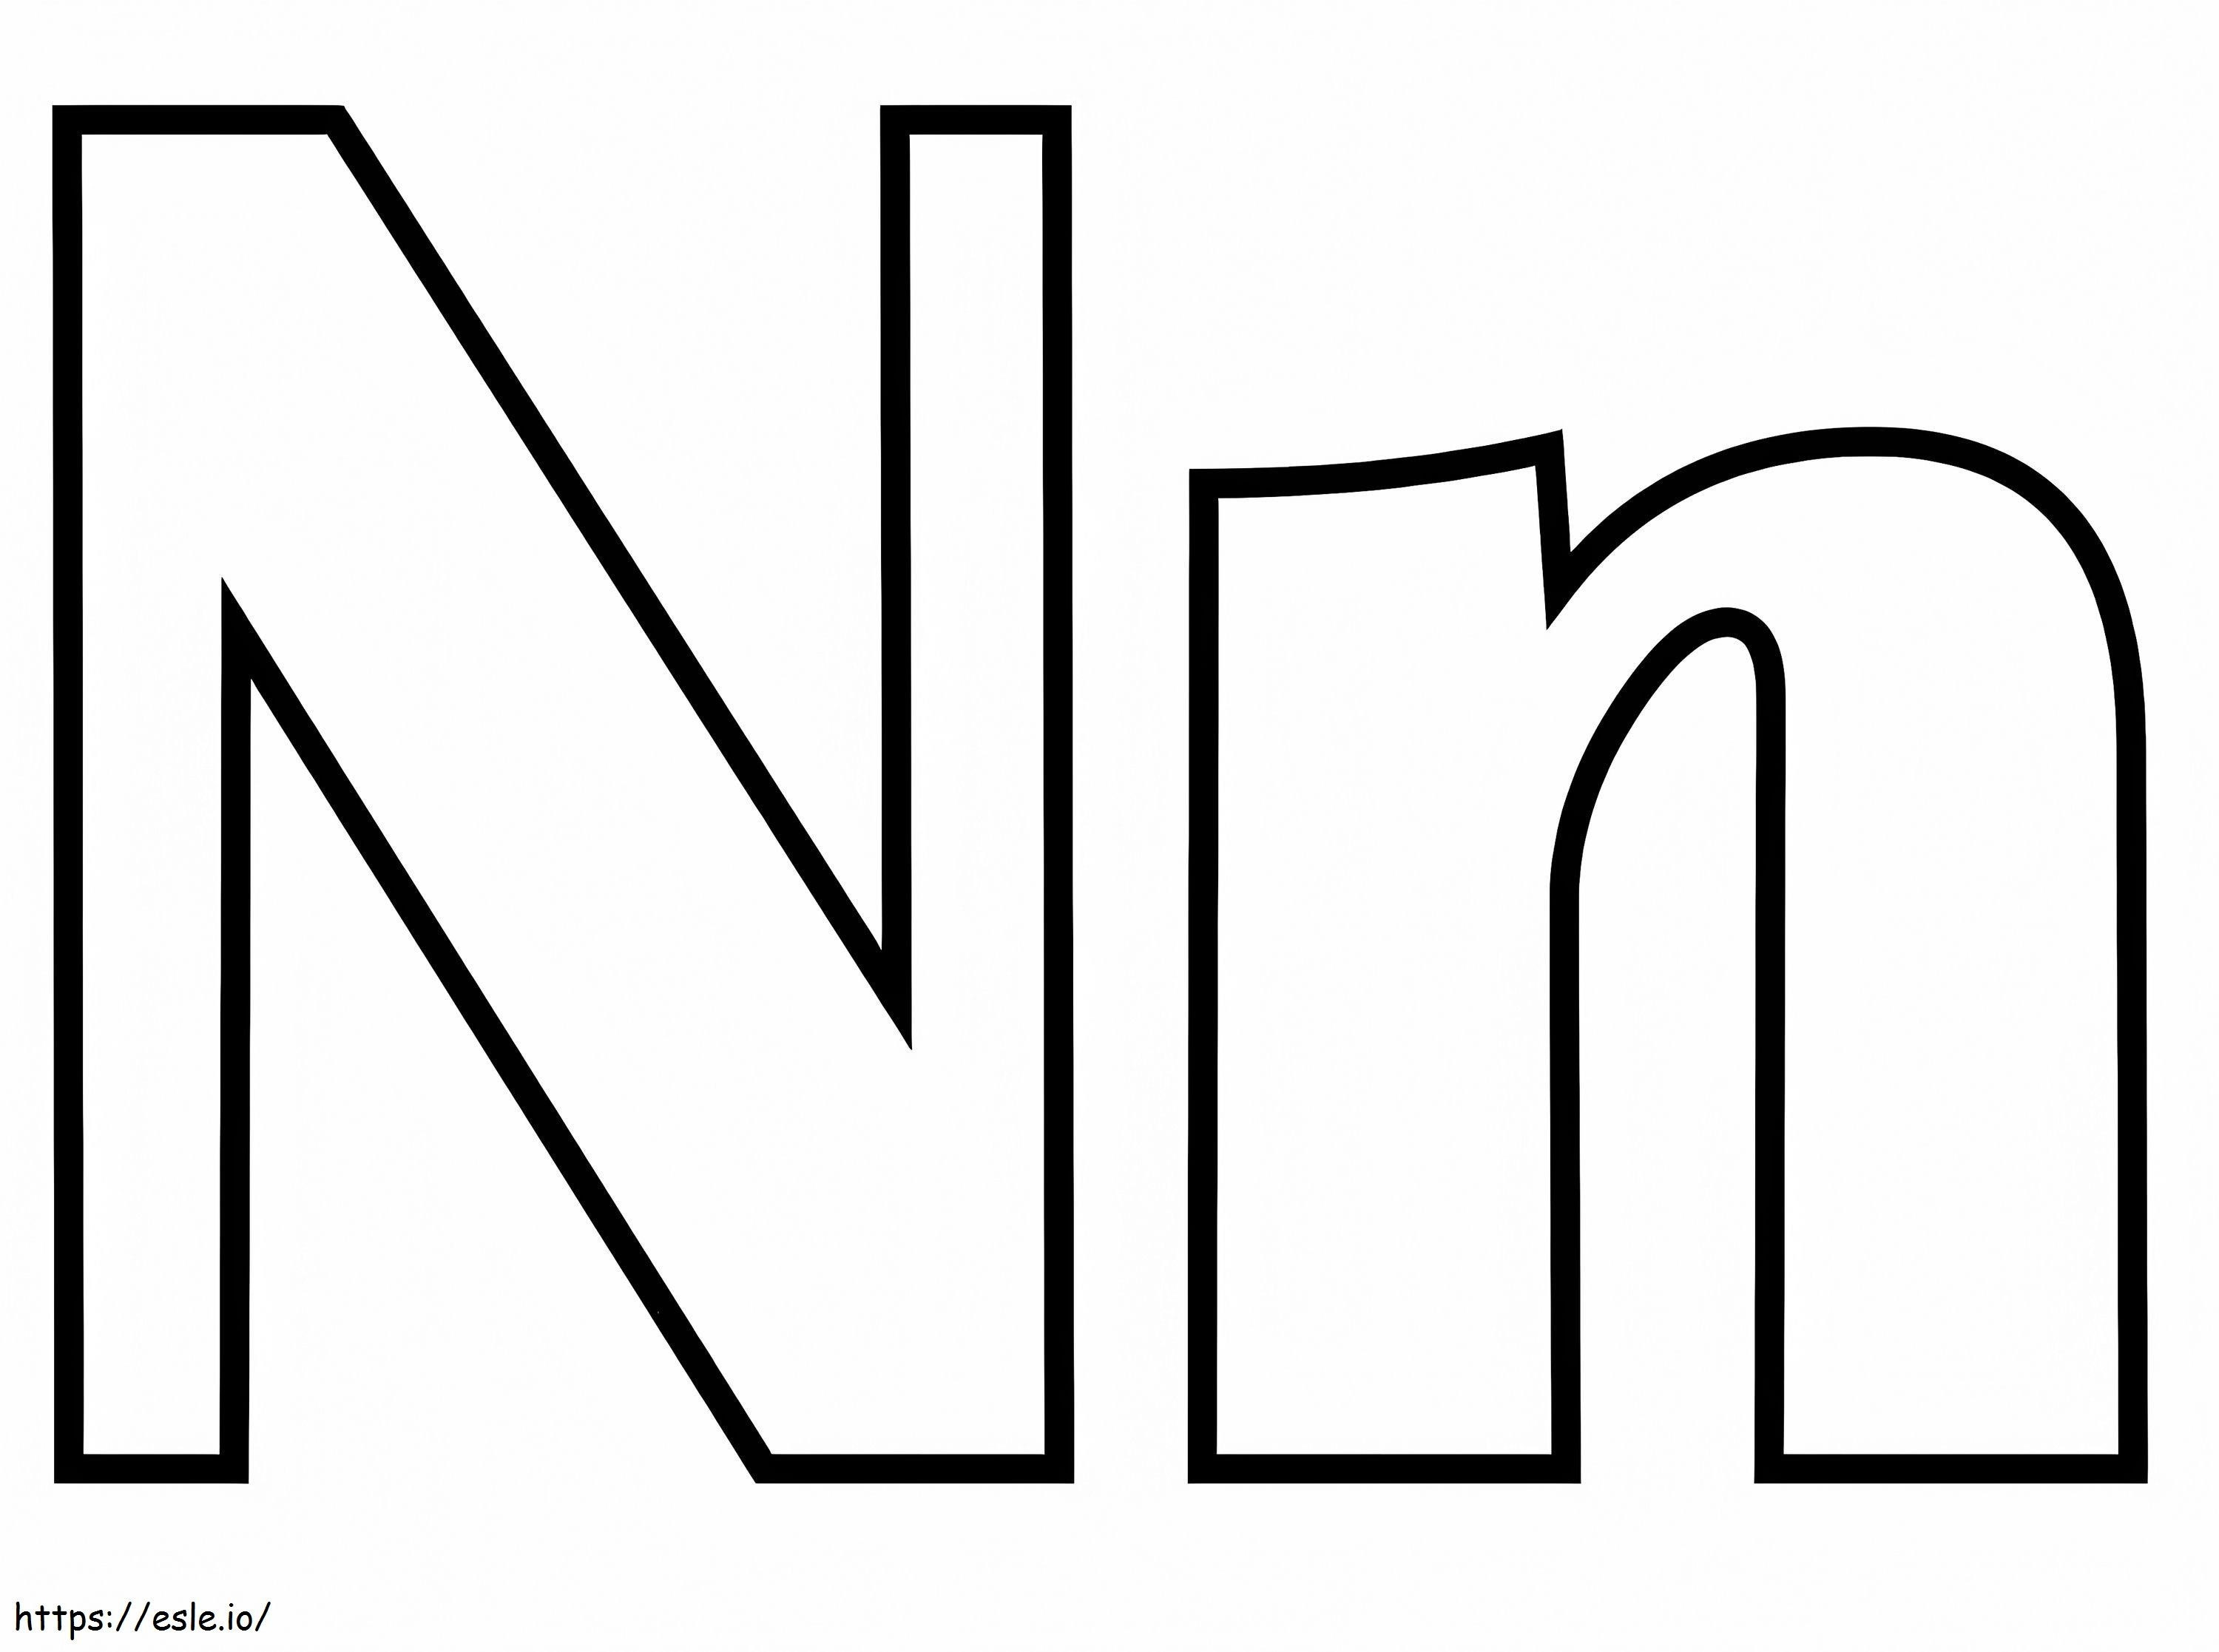 N betű 3 kifestő